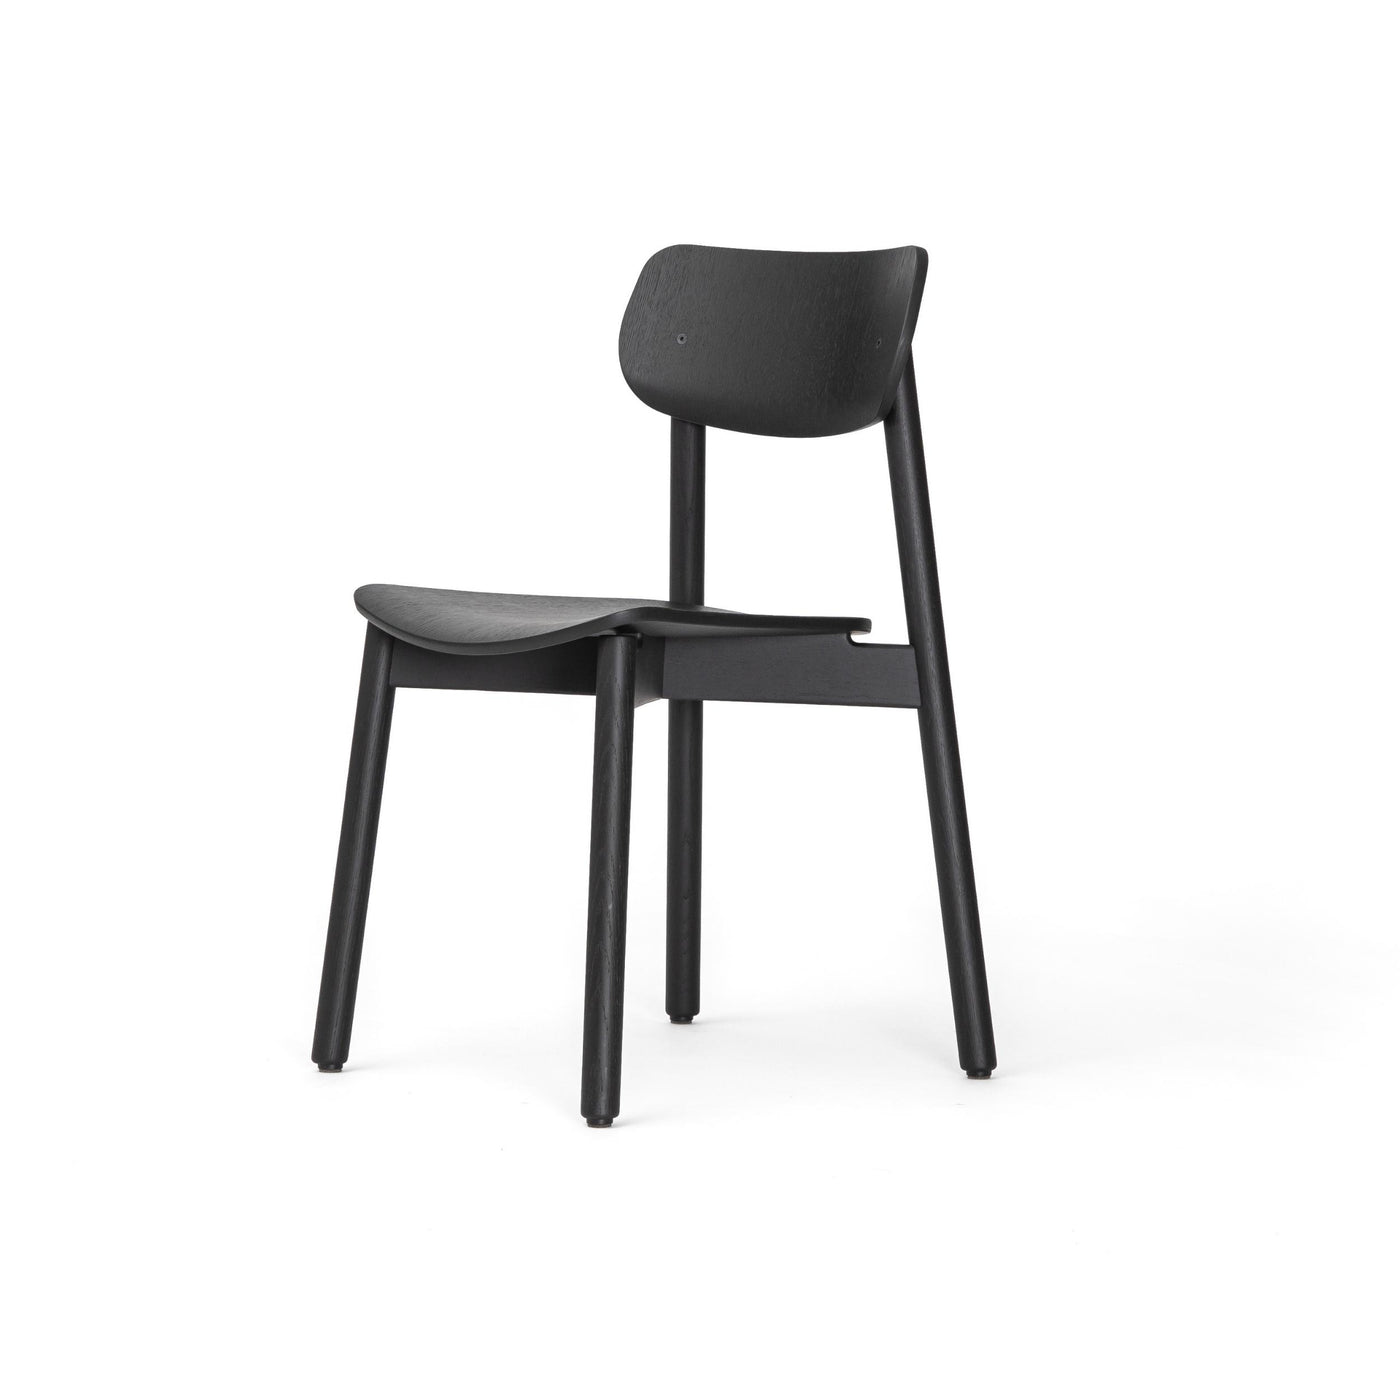 John Green Otis Chair. British design at someday designs. #colour_black